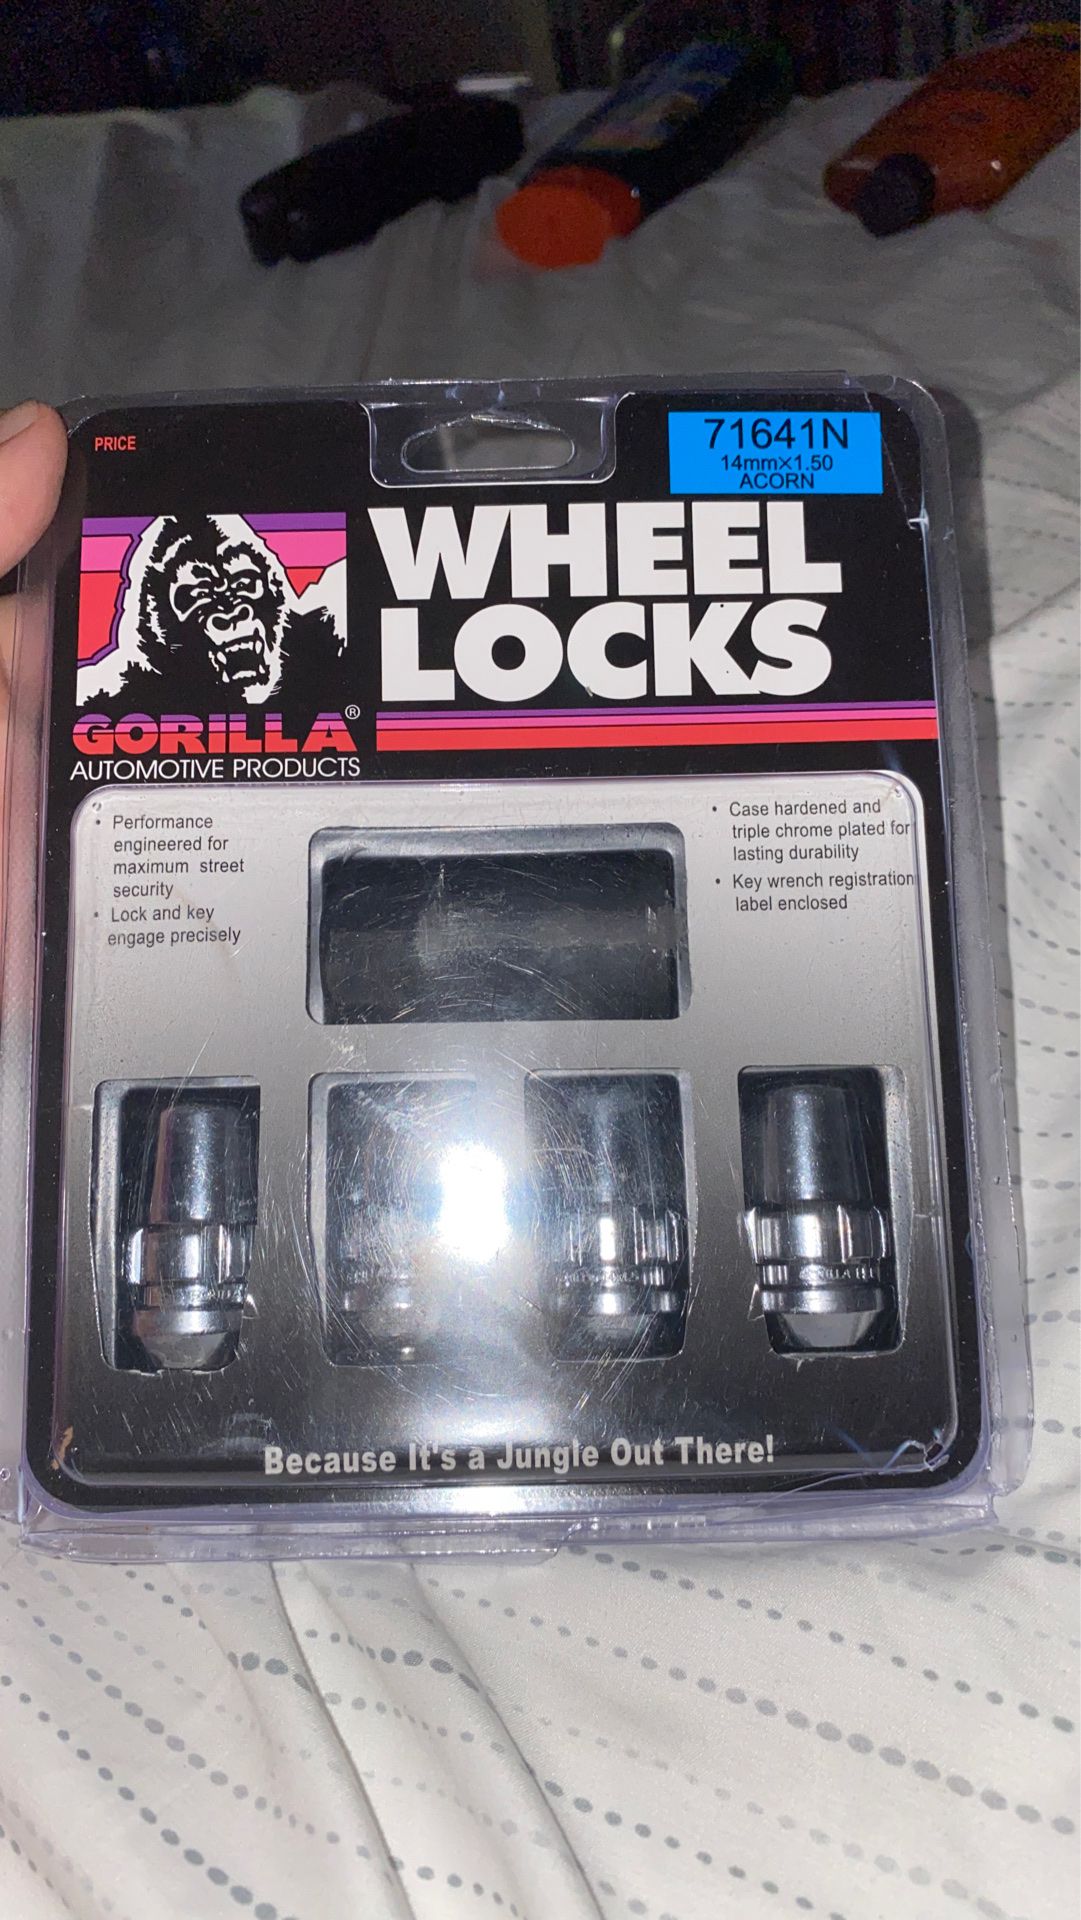 Wheel locks brand new Gorilla automotive products never open